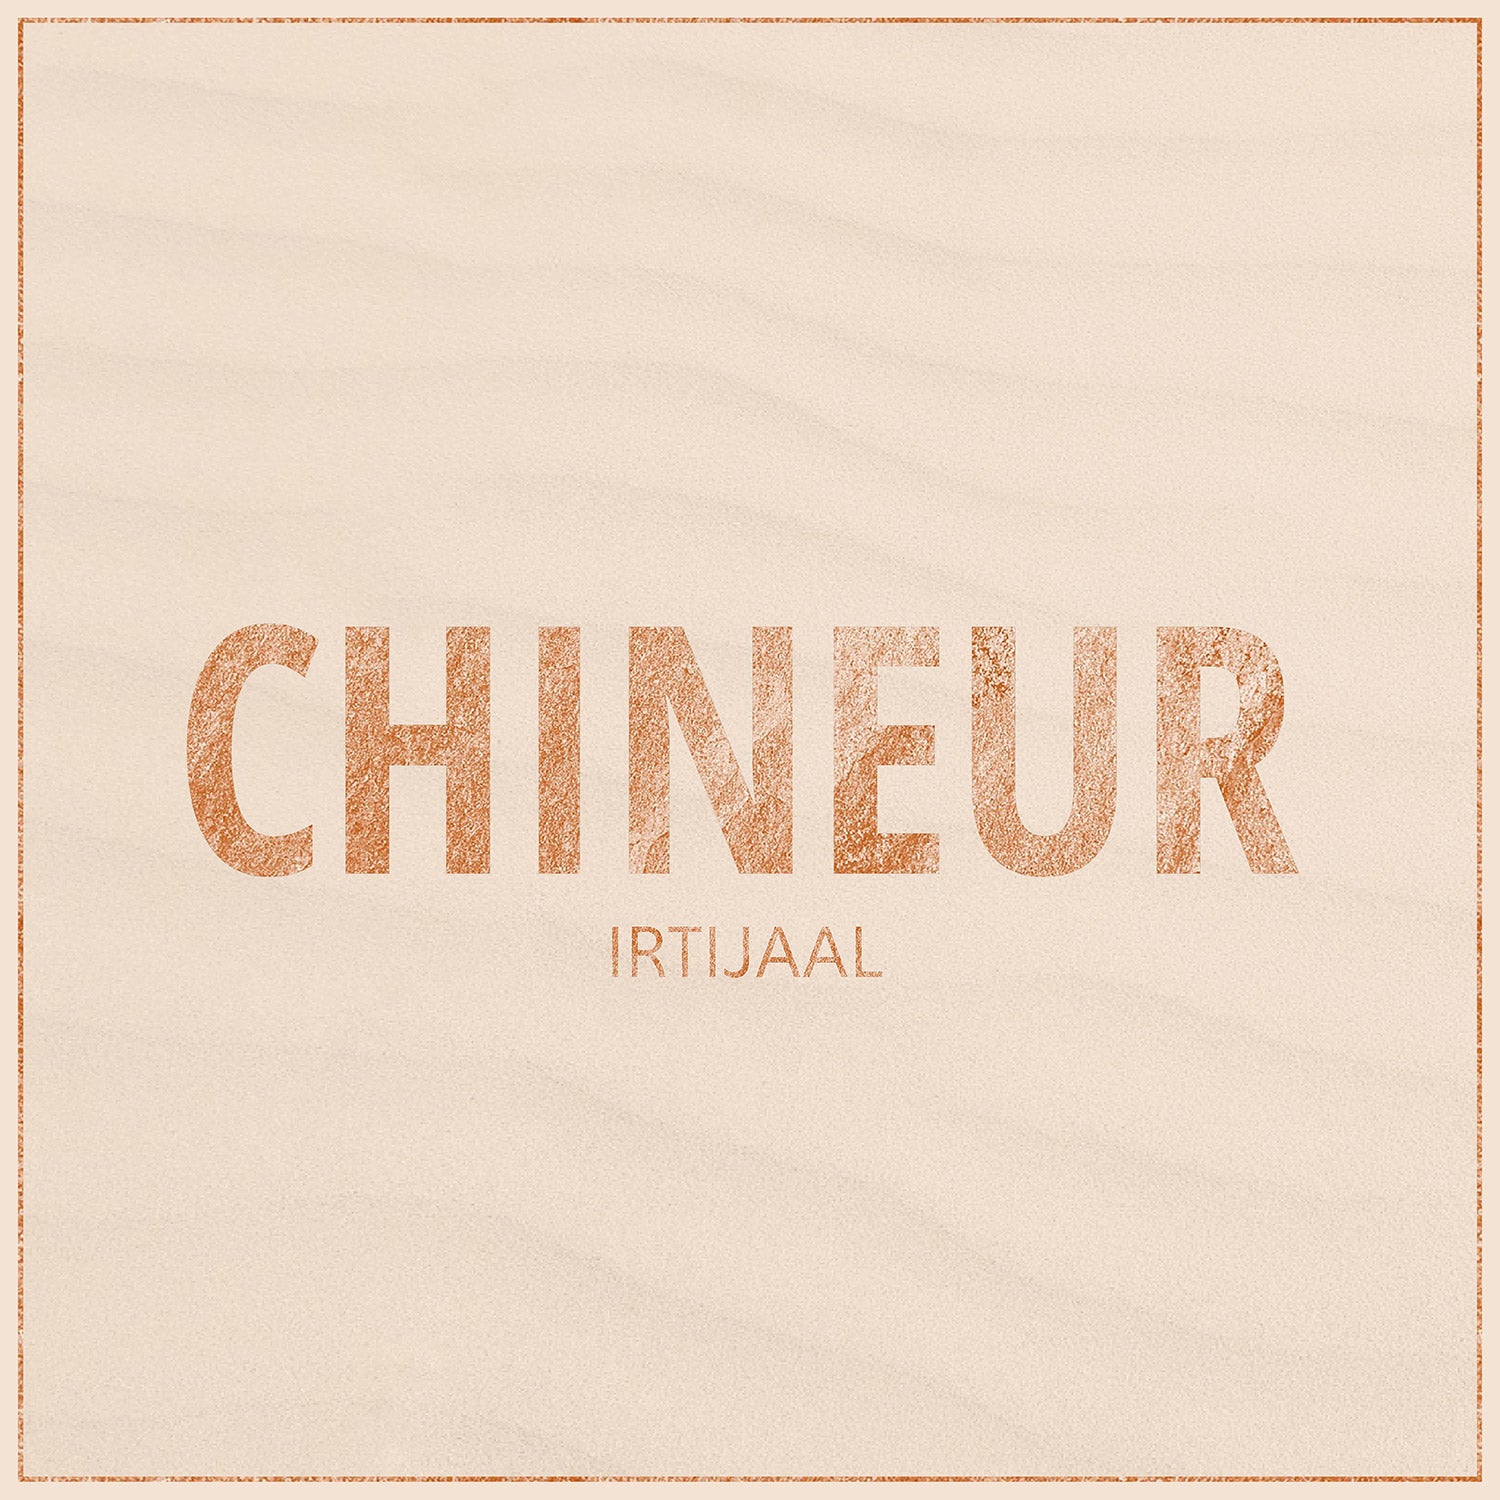 Chineur "Irtijaal" nouveau single !